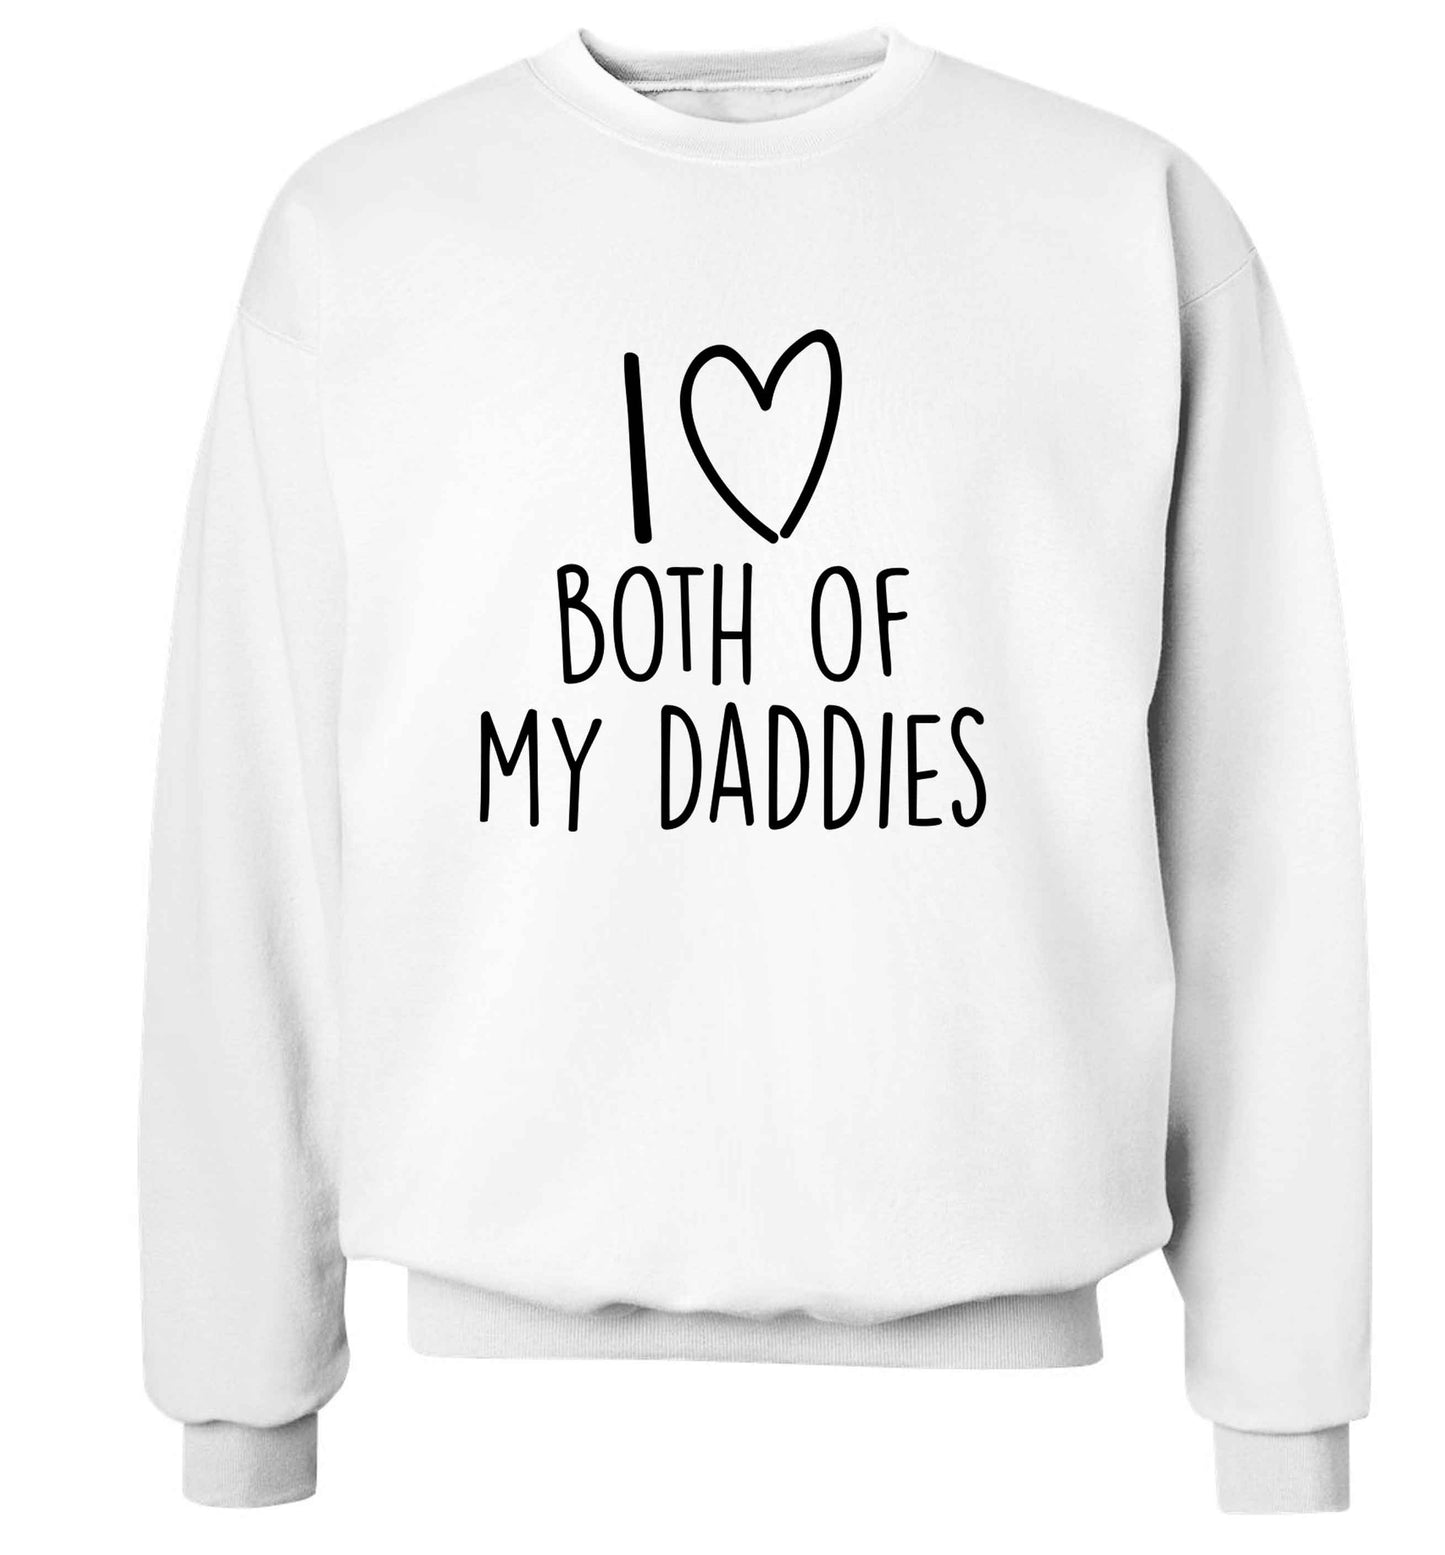 I love both of my daddies adult's unisex white sweater 2XL